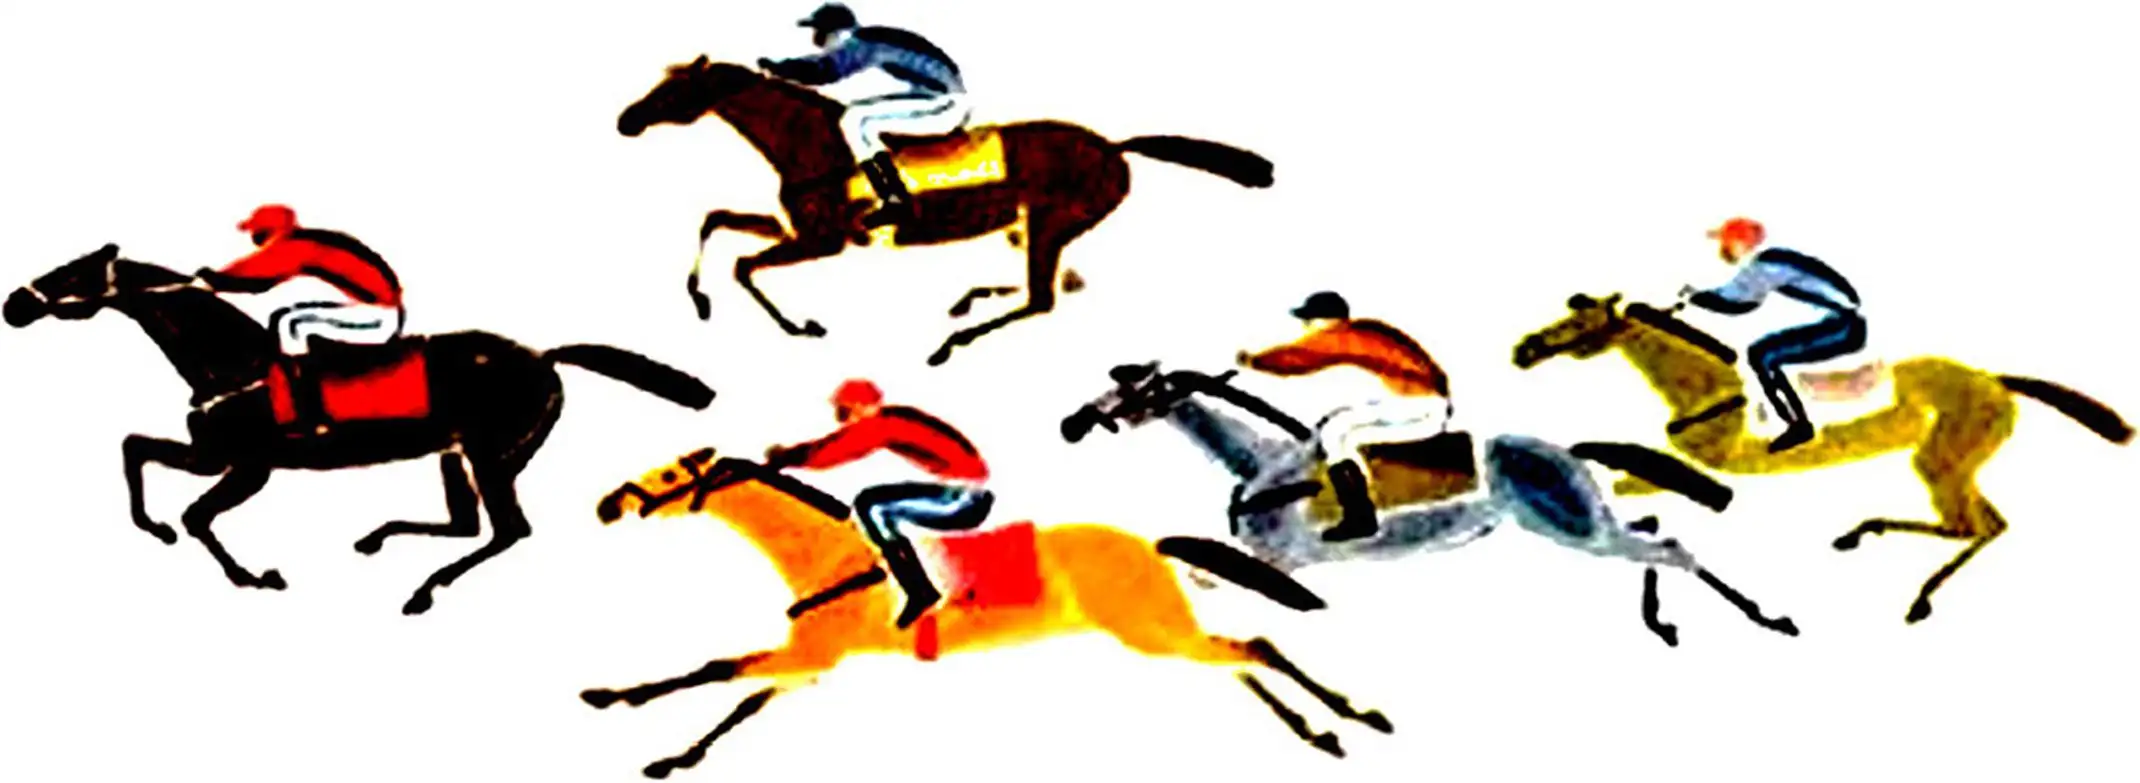 Jumping horses